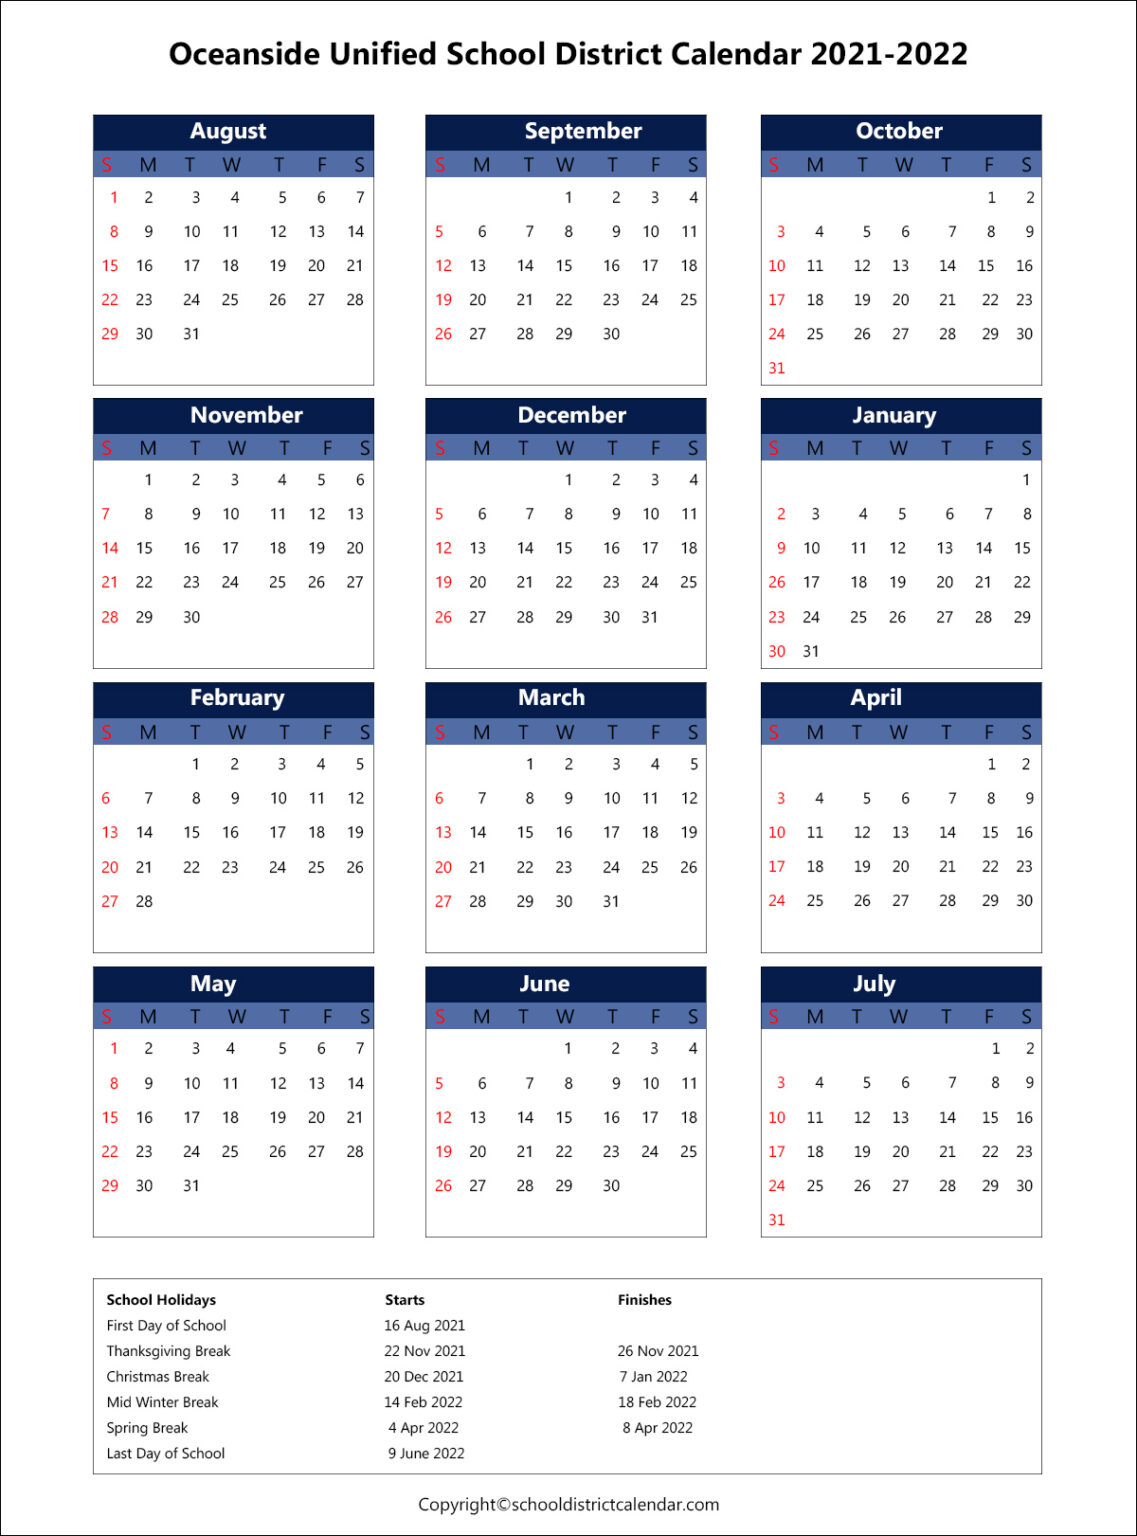 oceanside-unified-school-district-calendar-holidays-2021-2022